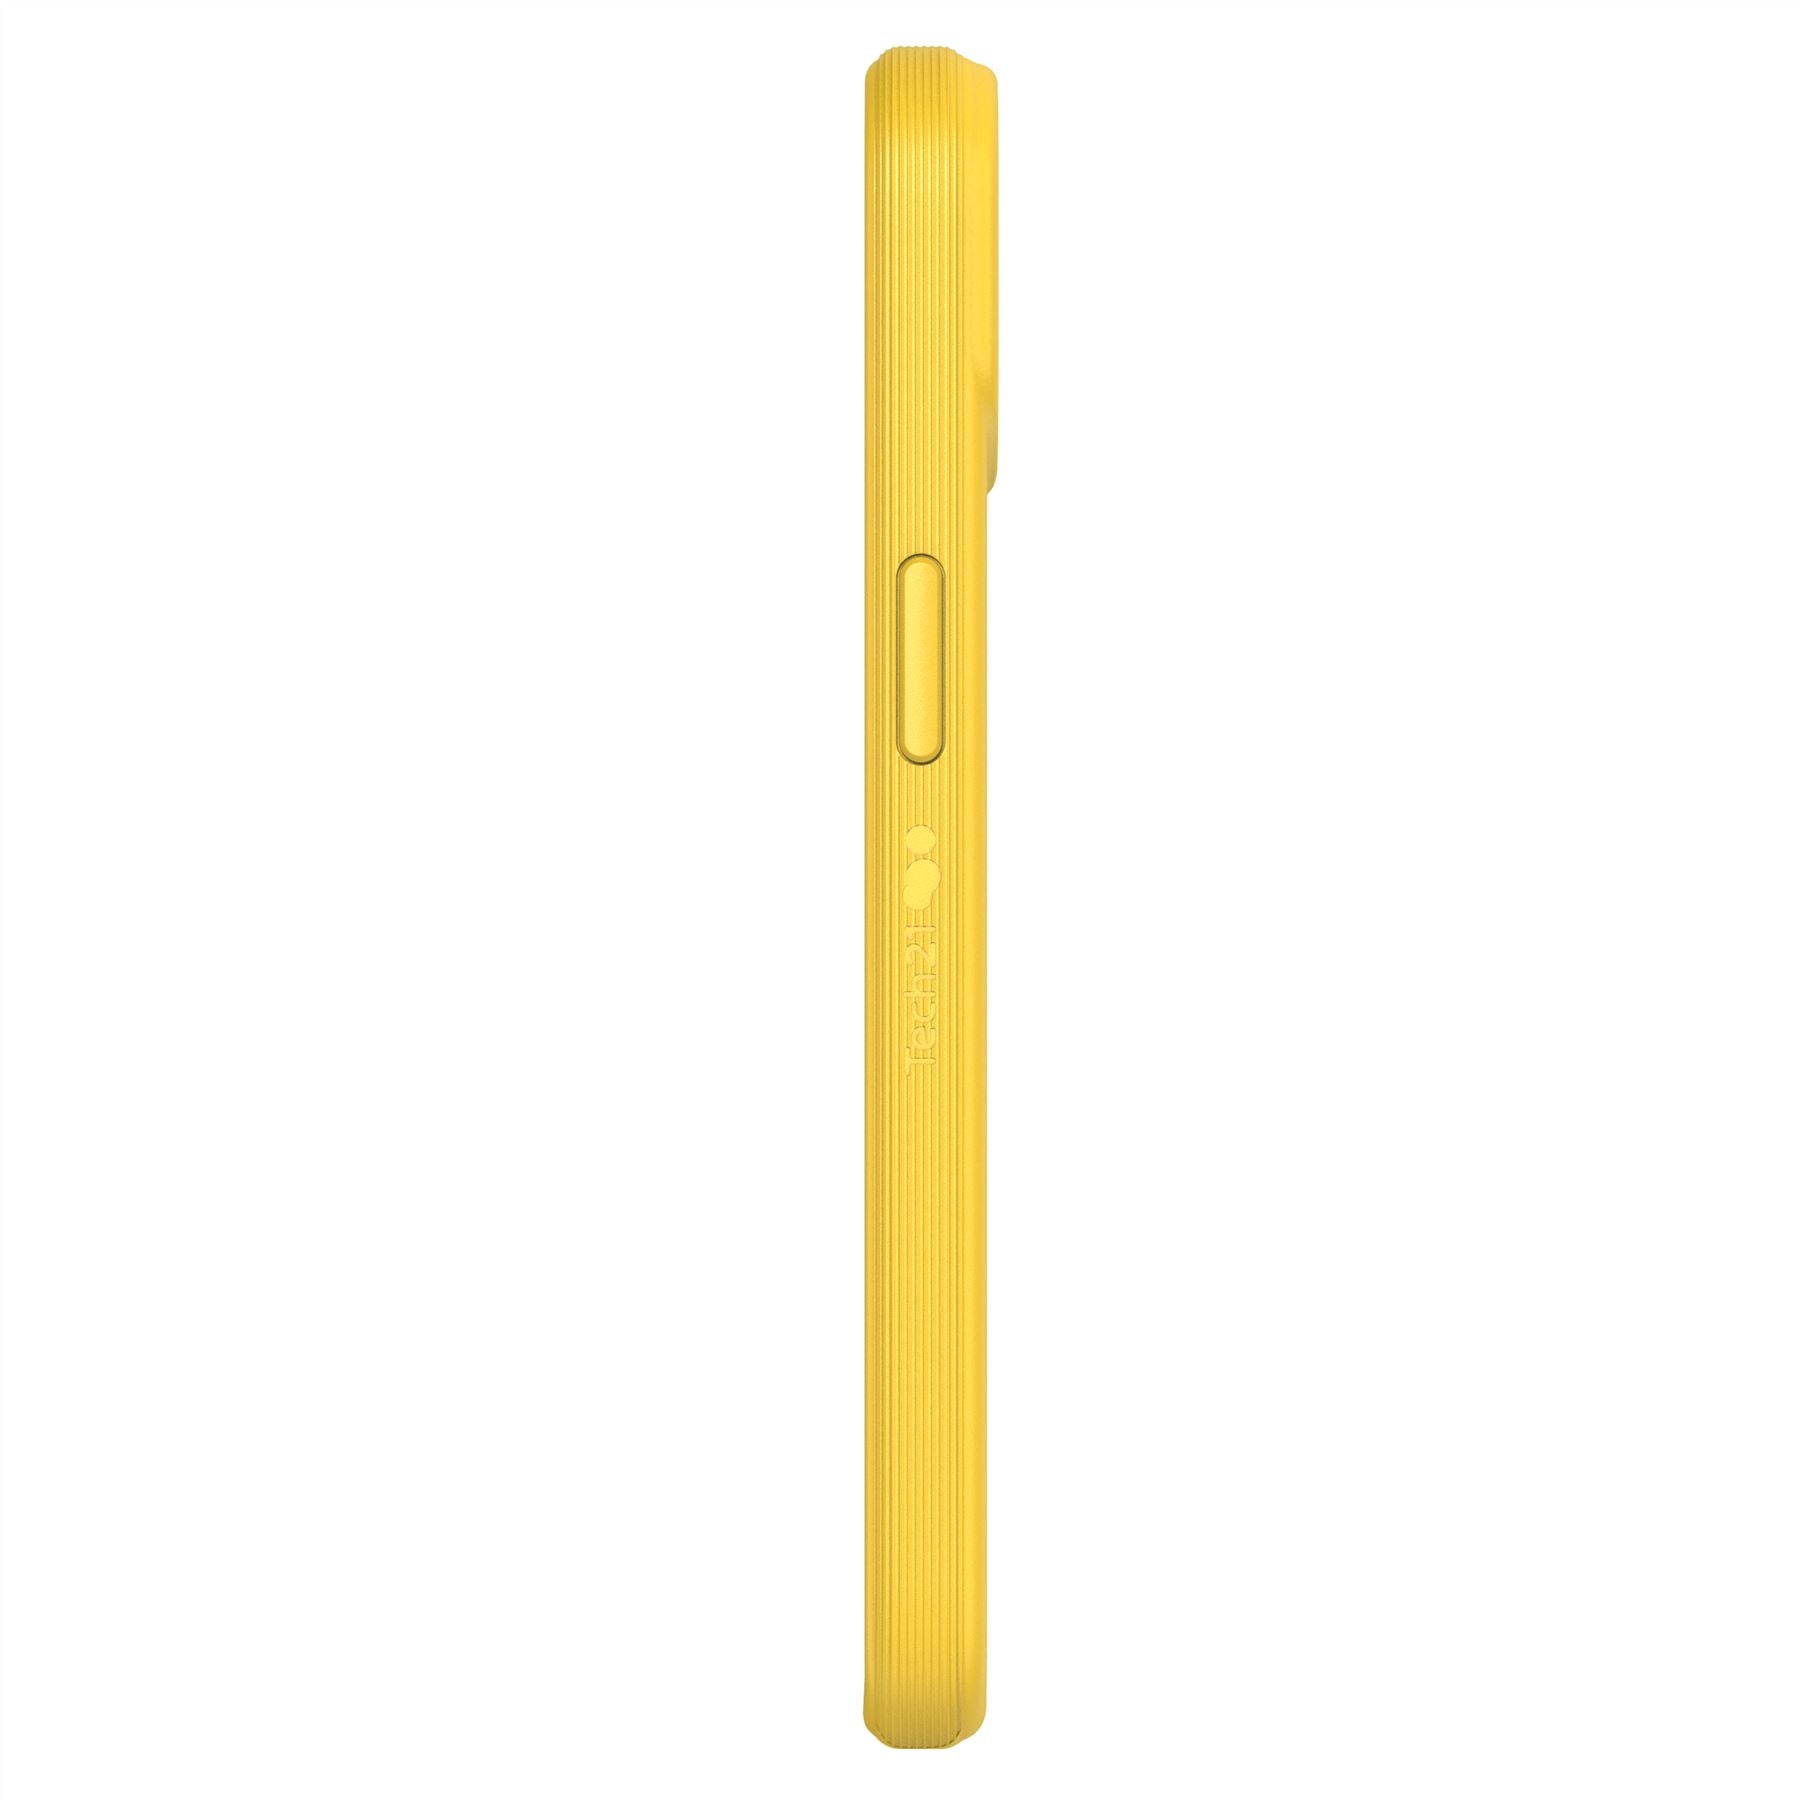 Evo Lite - Apple iPhone 13 Case - Sunflower Yellow